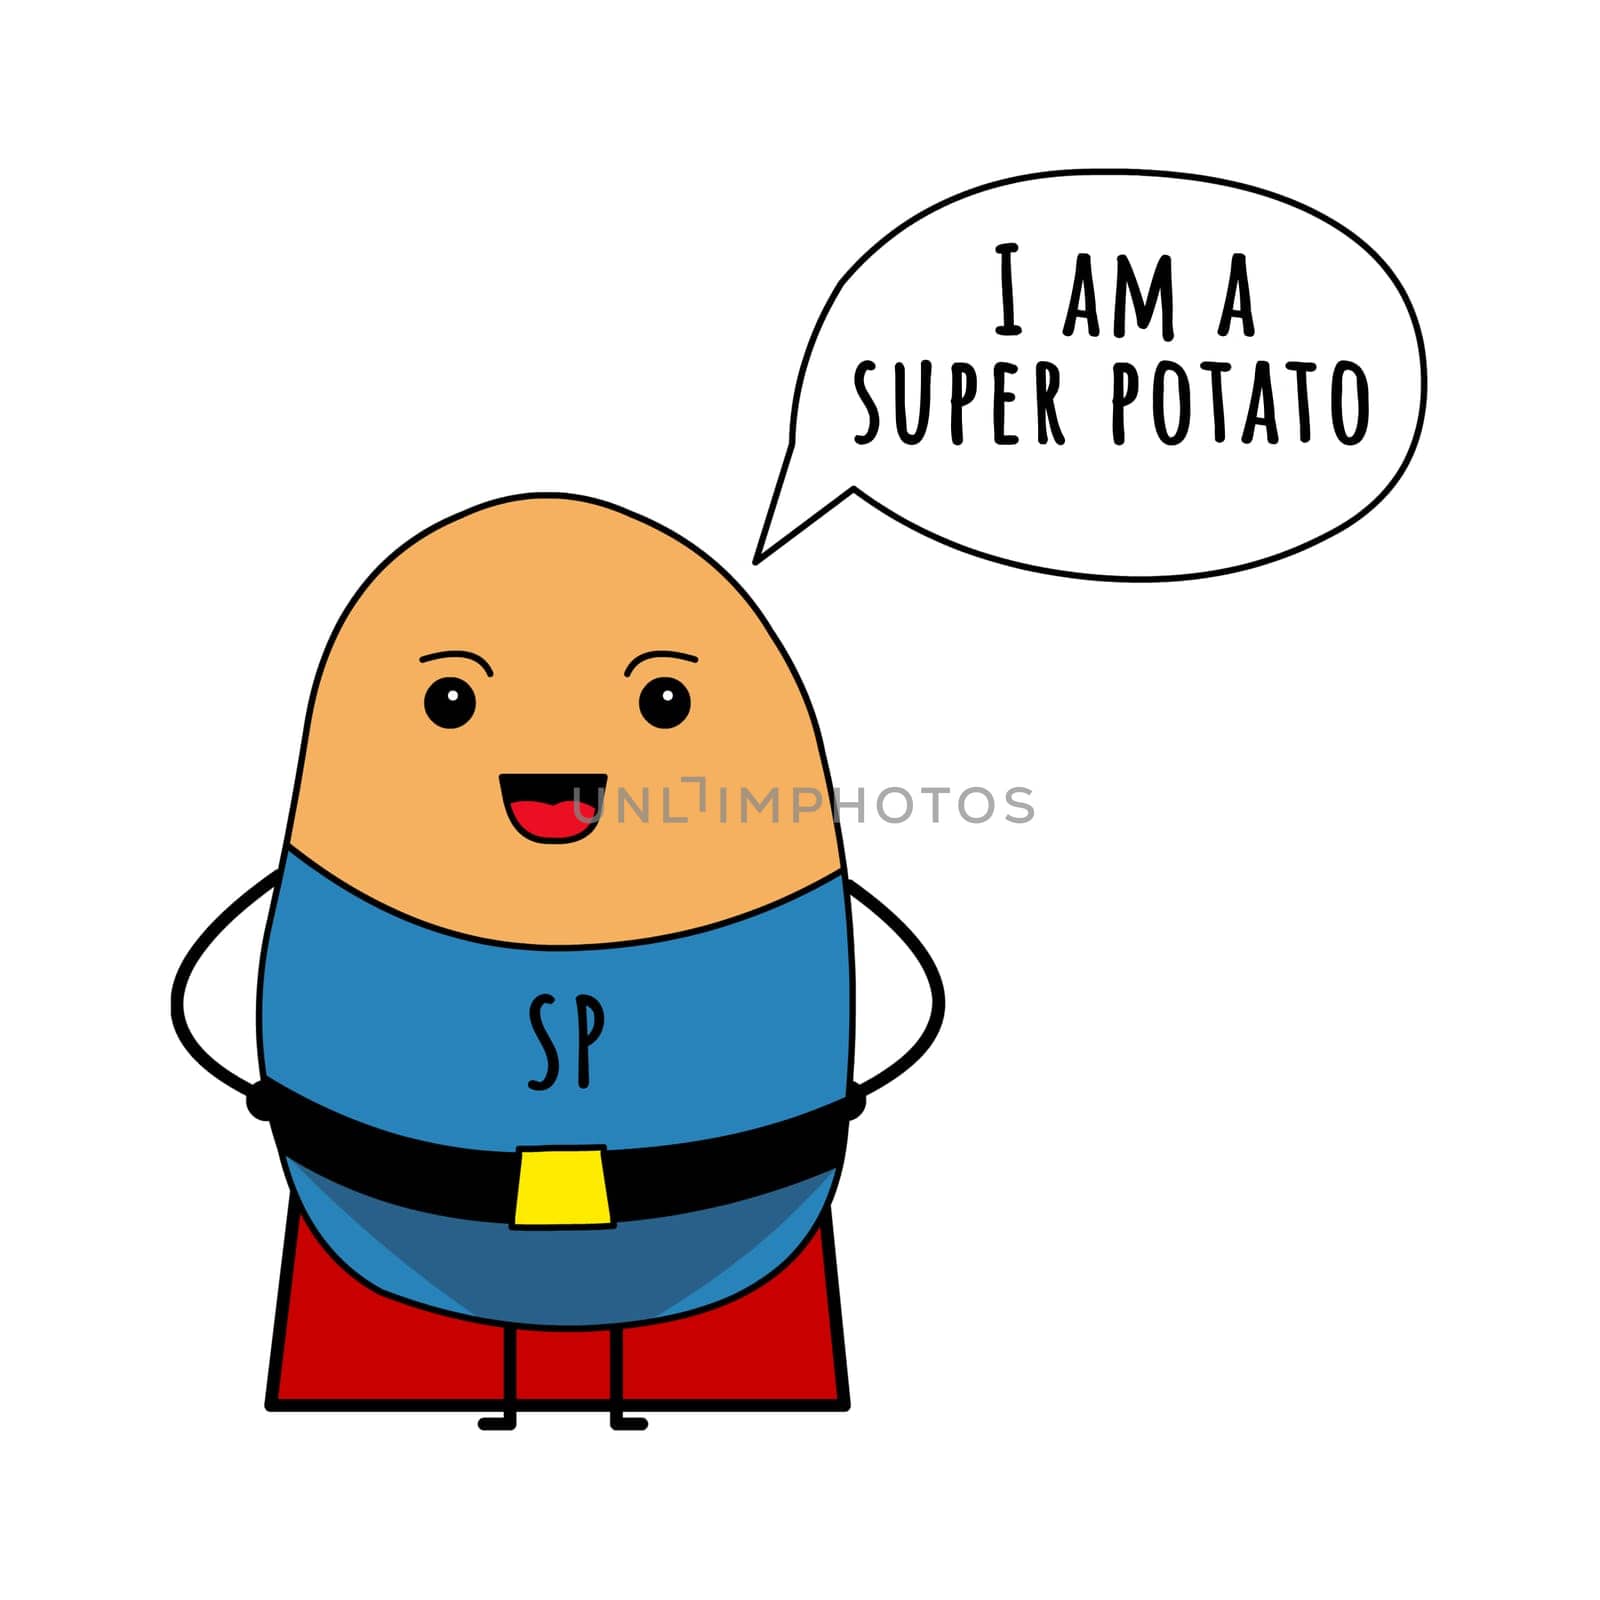 I am a super potato by Bigalbaloo